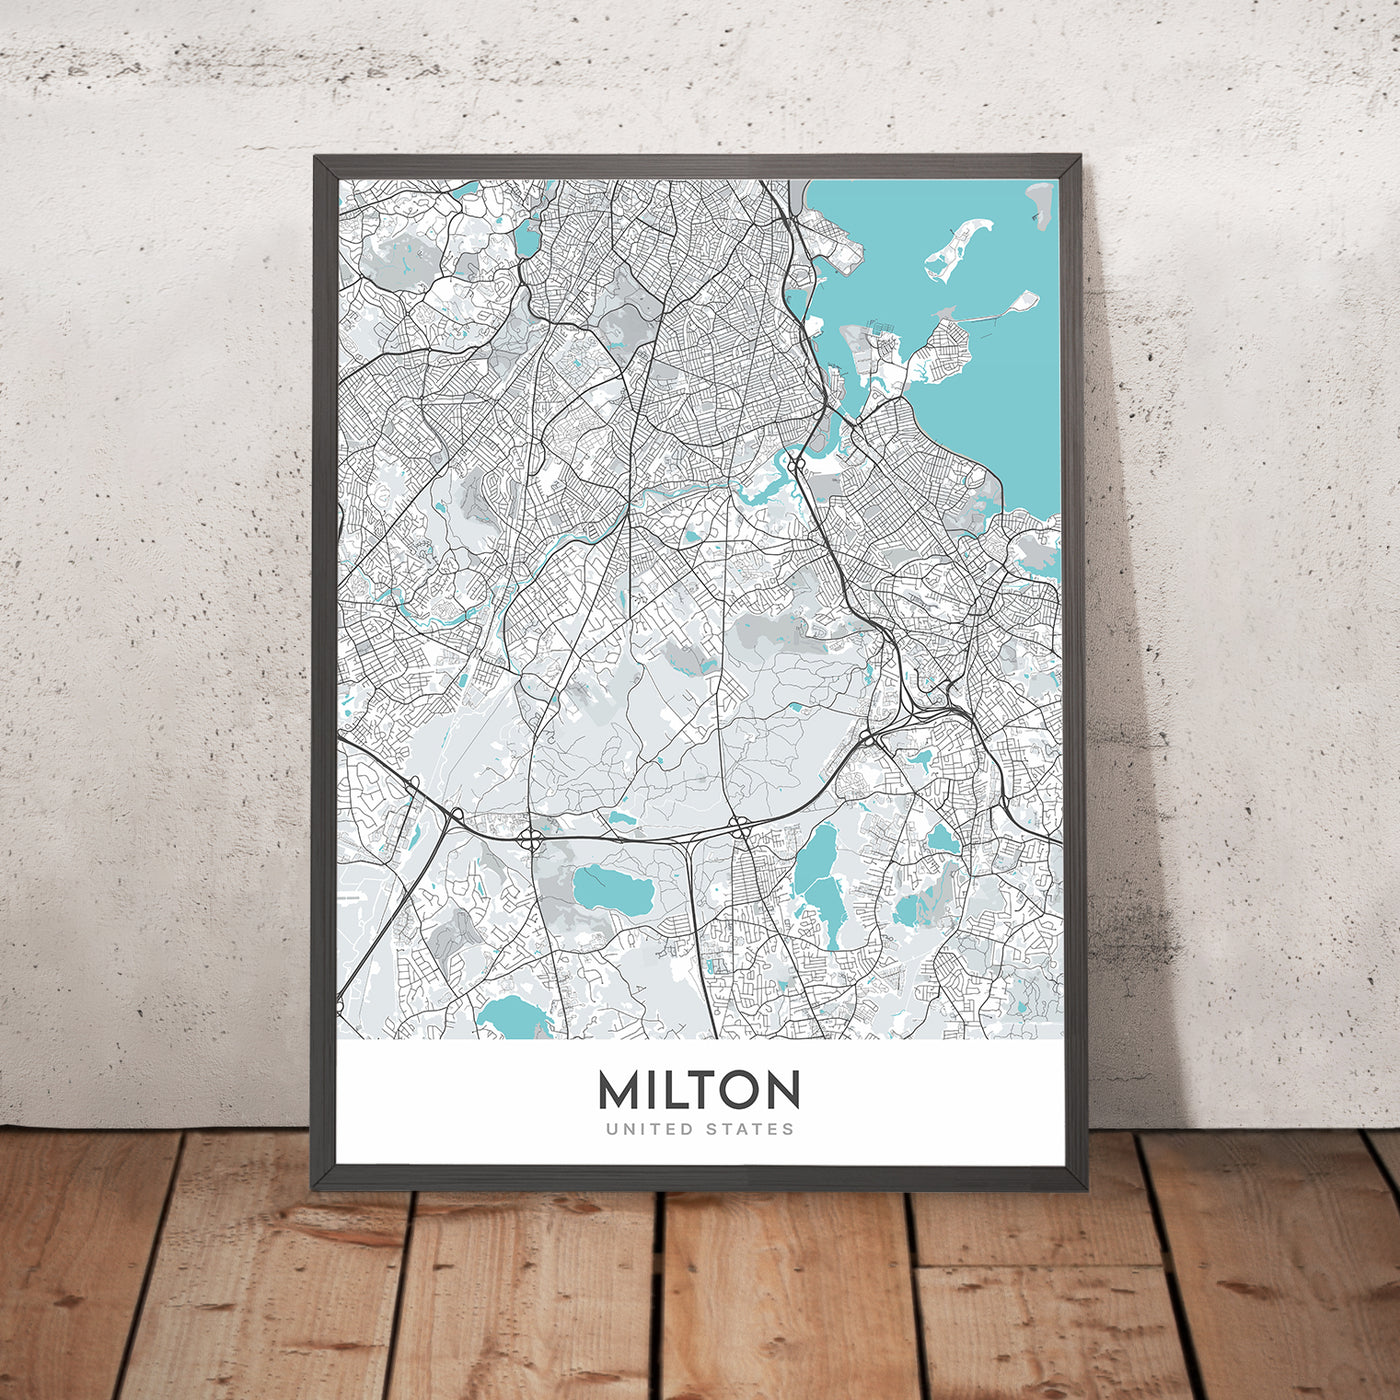 Moderner Stadtplan von Milton, MA: Blue Hills Reservat, Cunningham Park, Houghton's Pond, Chickatawbut Hill, Blue Hill Avenue